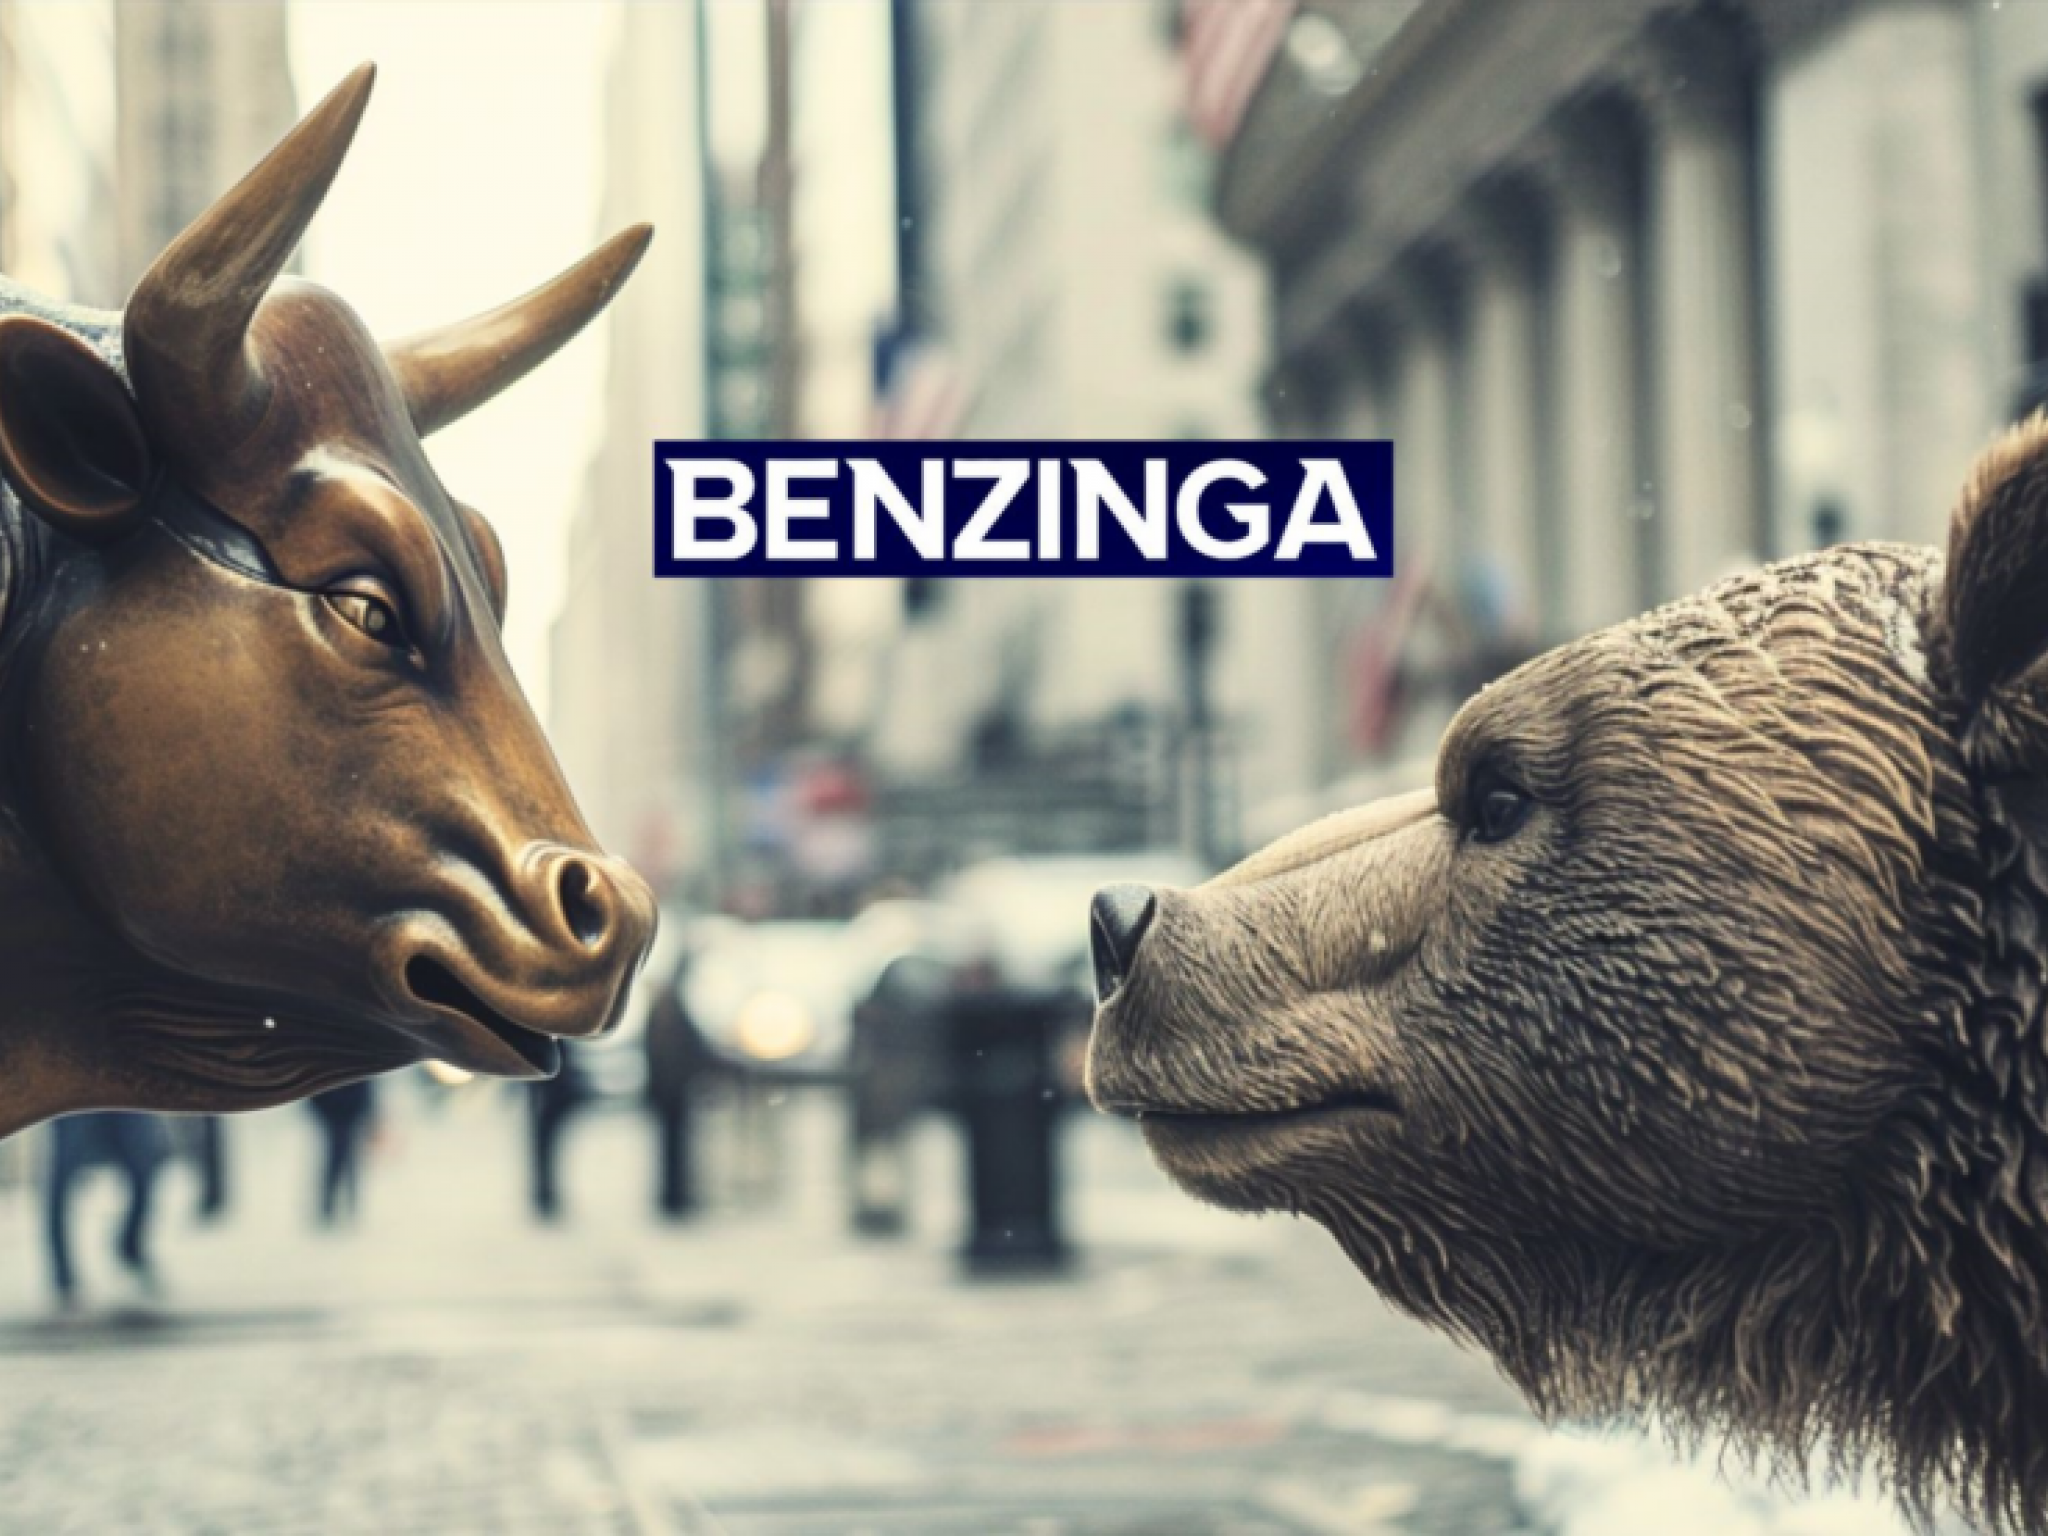  benzinga-bulls-and-bears-apple-nvidia-palantir-microstrategy-and-shiba-inus-ambitious-trillion-dollar-vision 